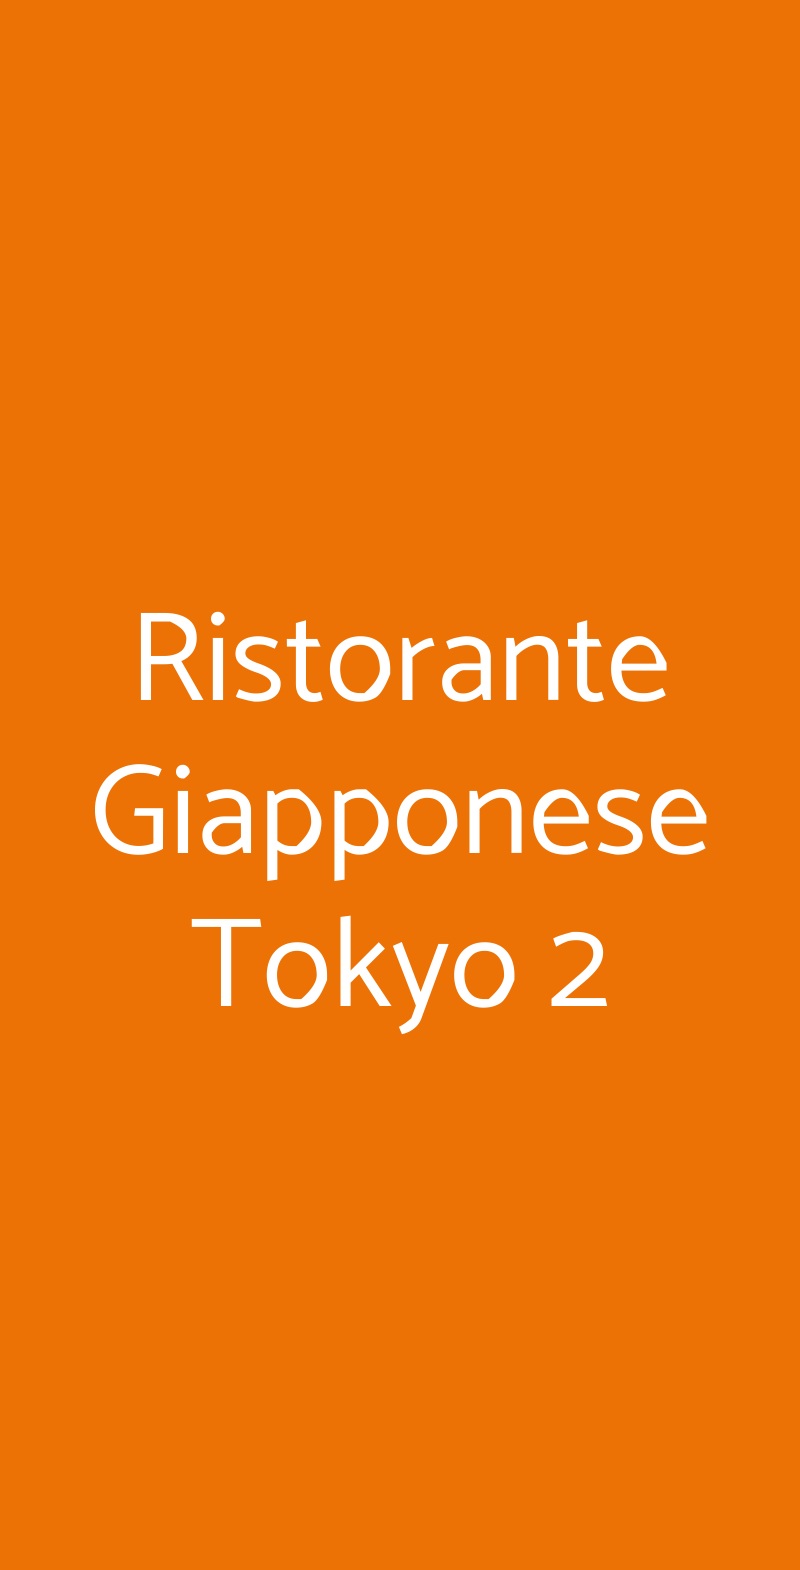 Ristorante Giapponese Tokyo 2 Napoli menù 1 pagina